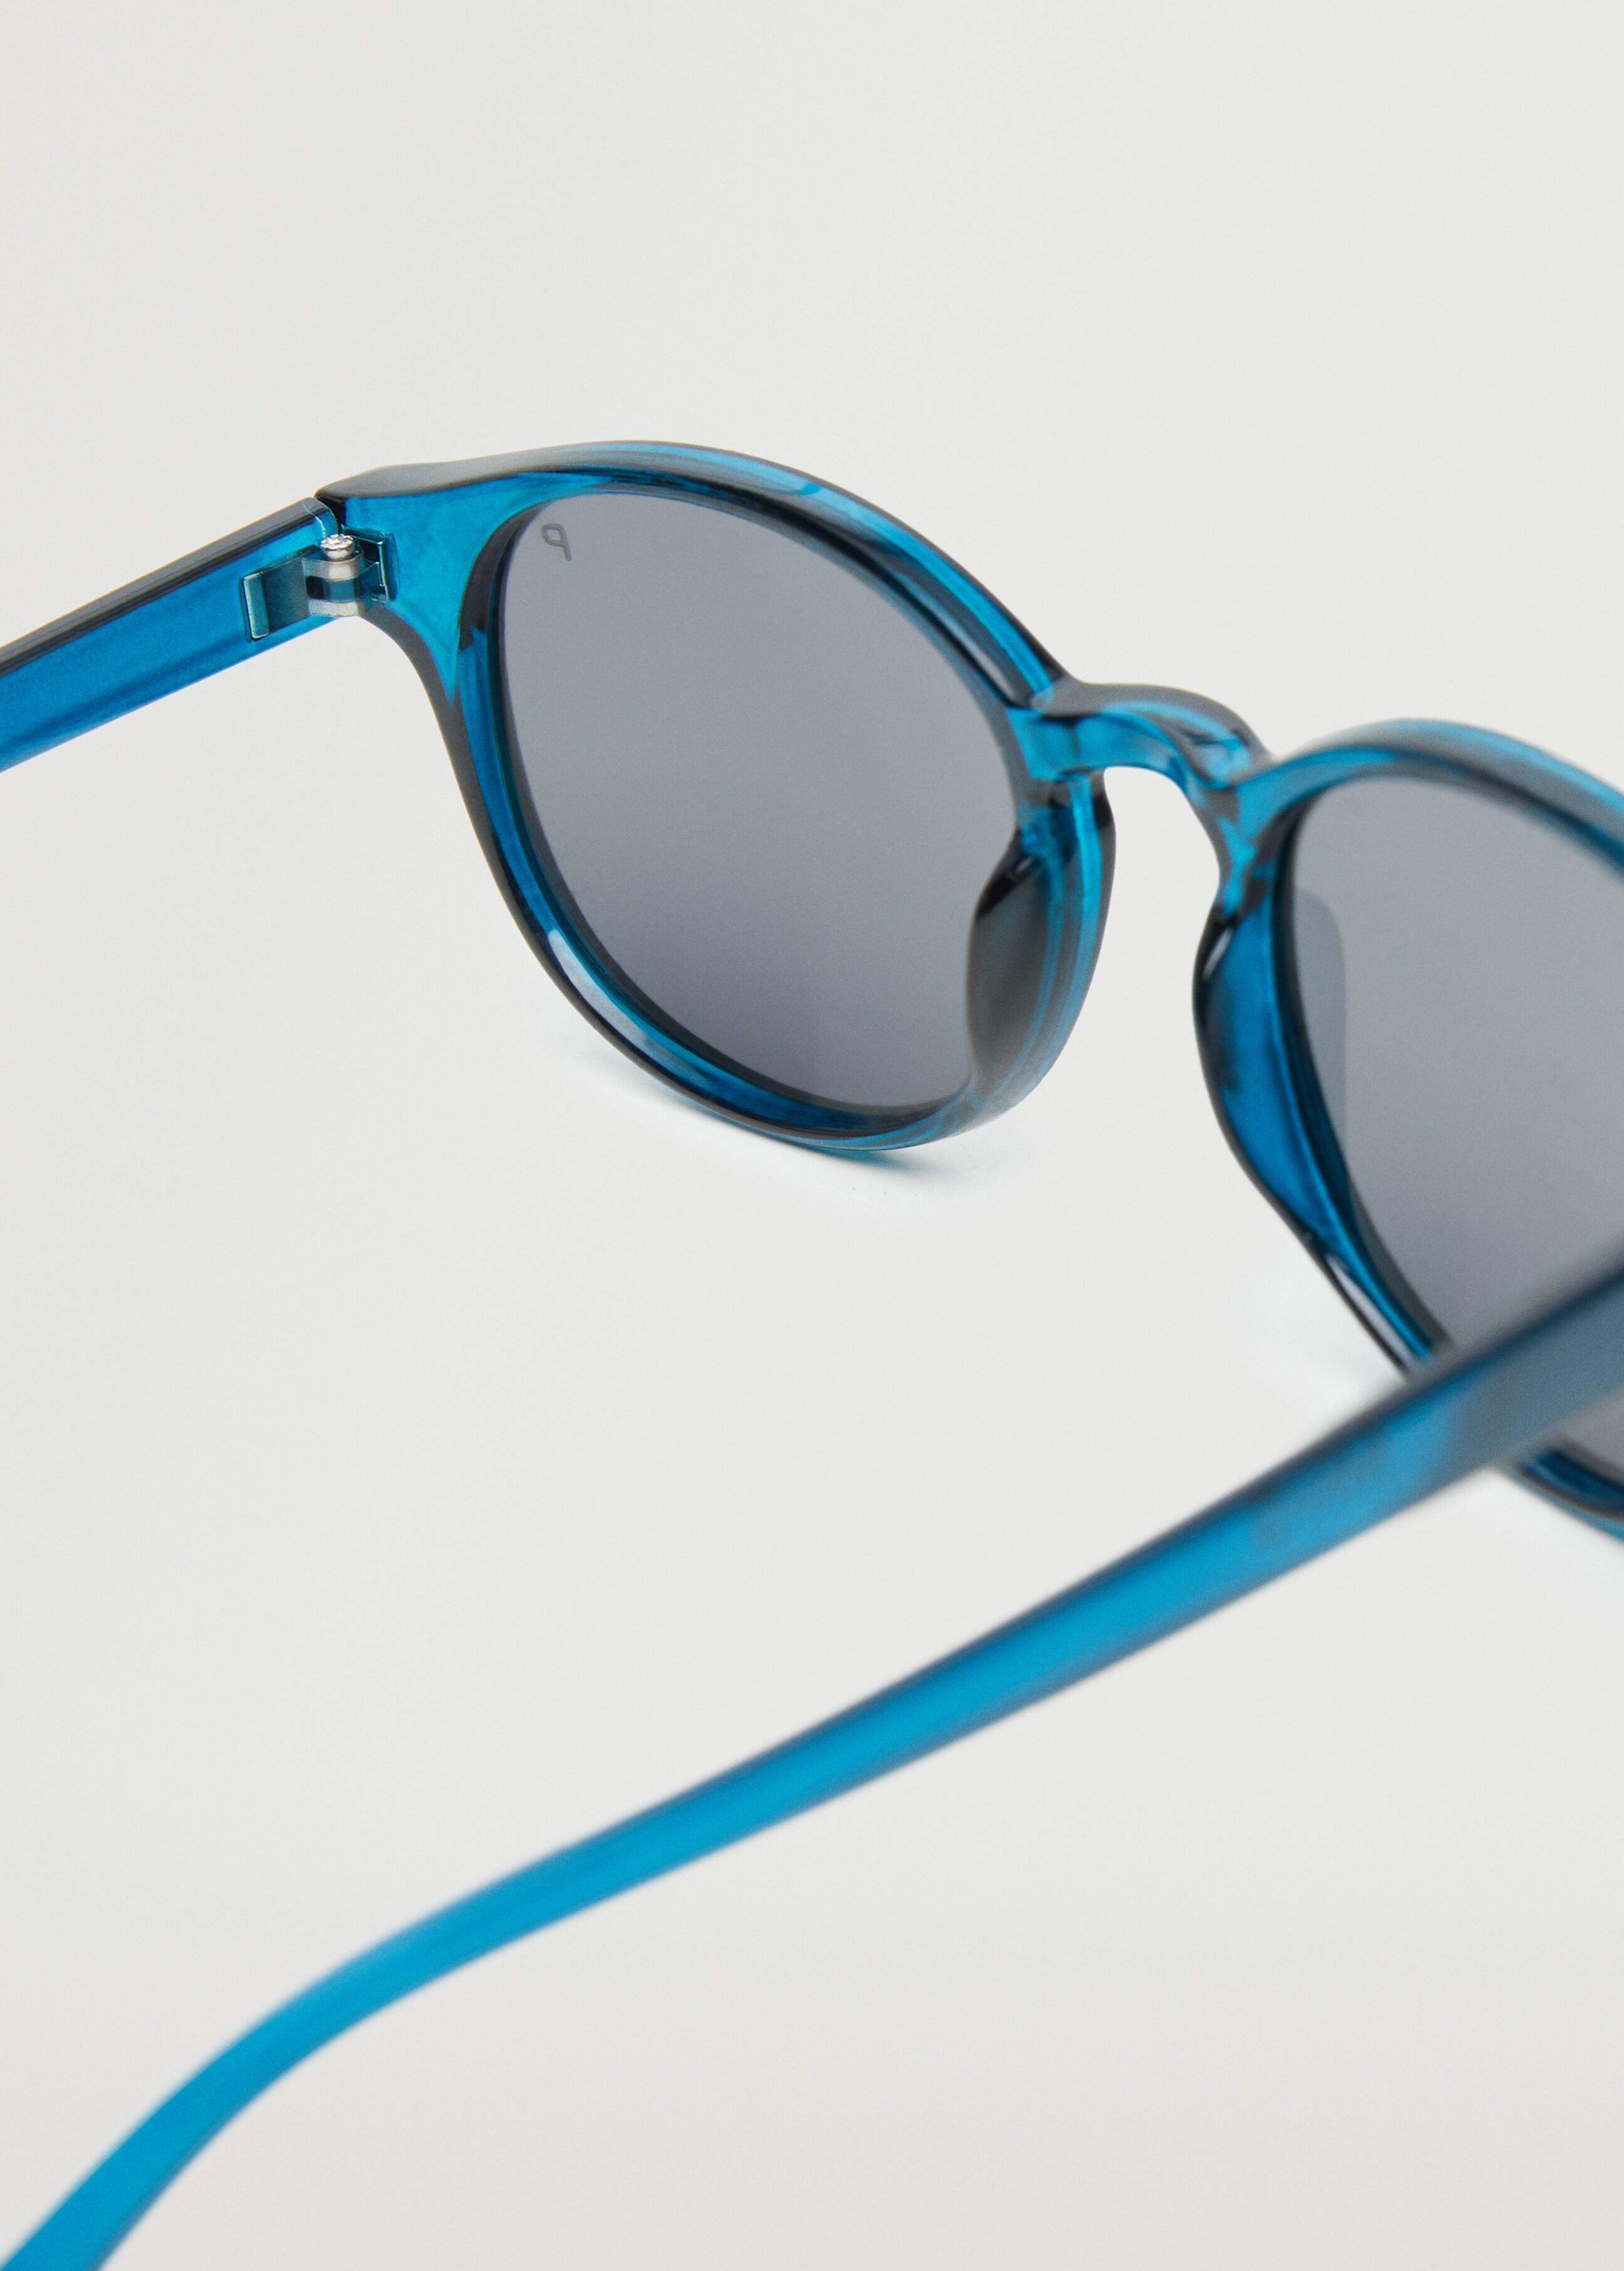 Polarised sunglasses - Details of the article 2